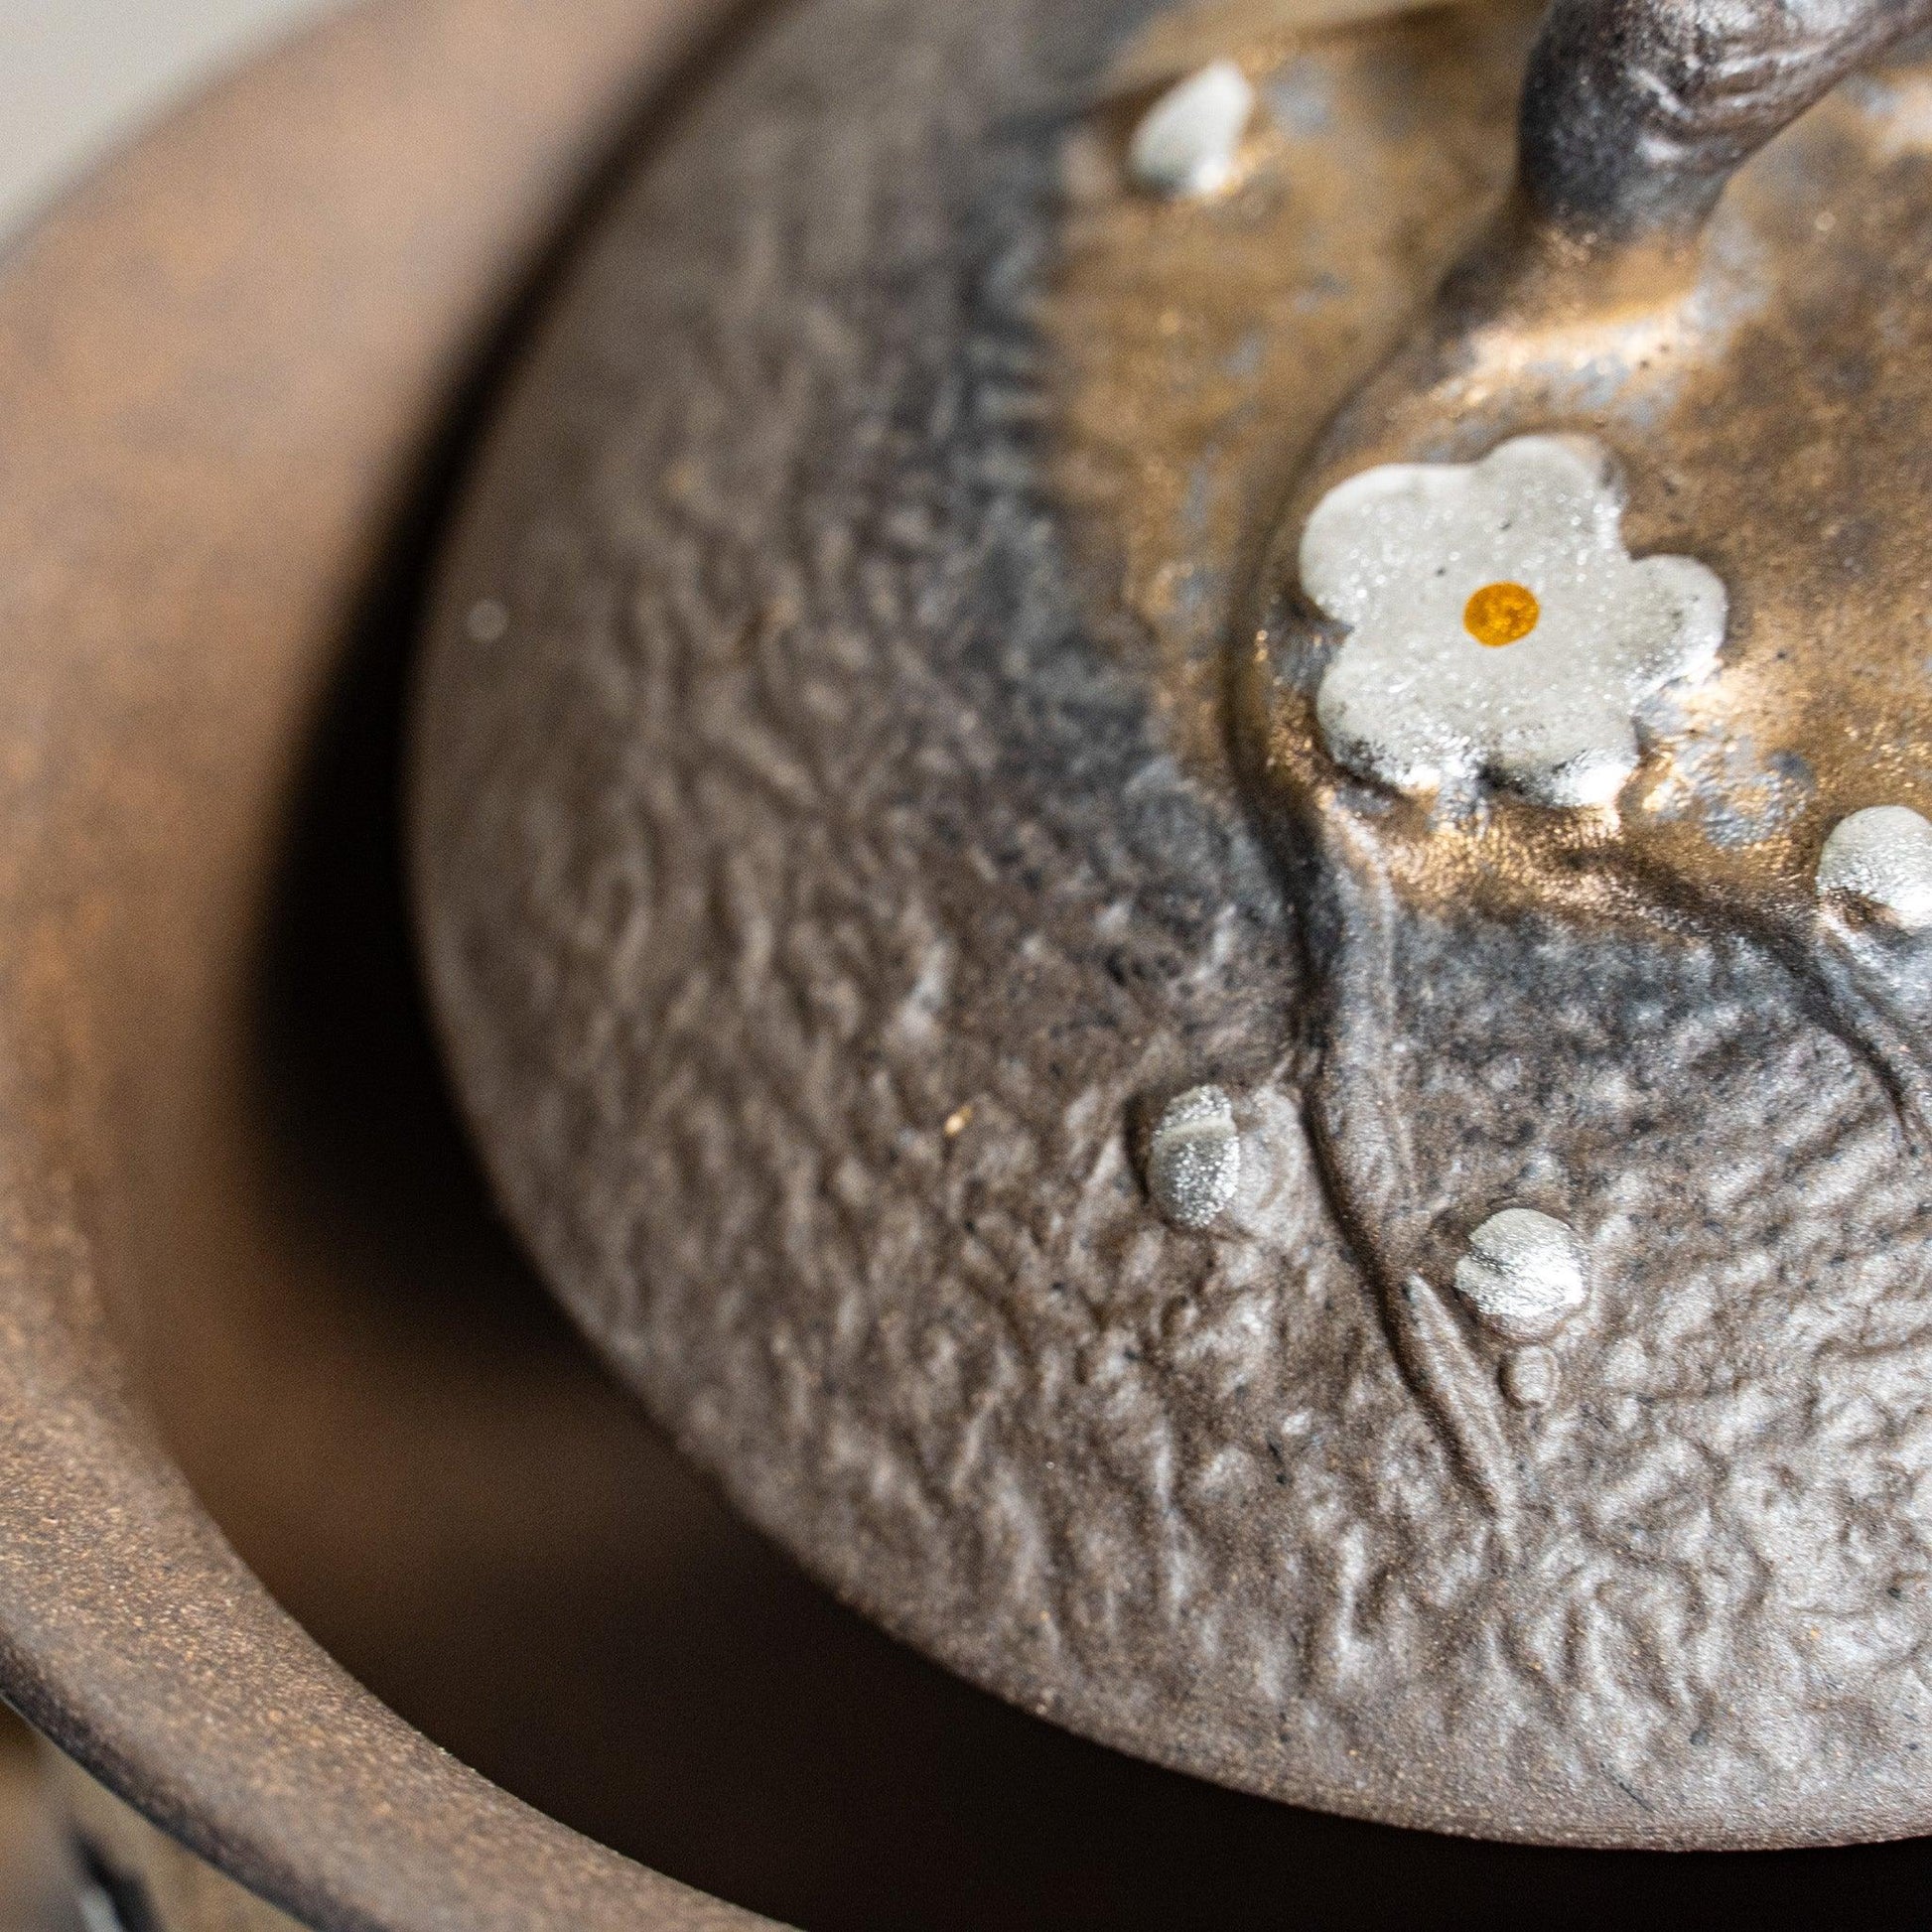 Handmade Vintage Gilded Iron Glaze Plum Blossom Coarse Pottery Tea Mug - Raf LifeStyle